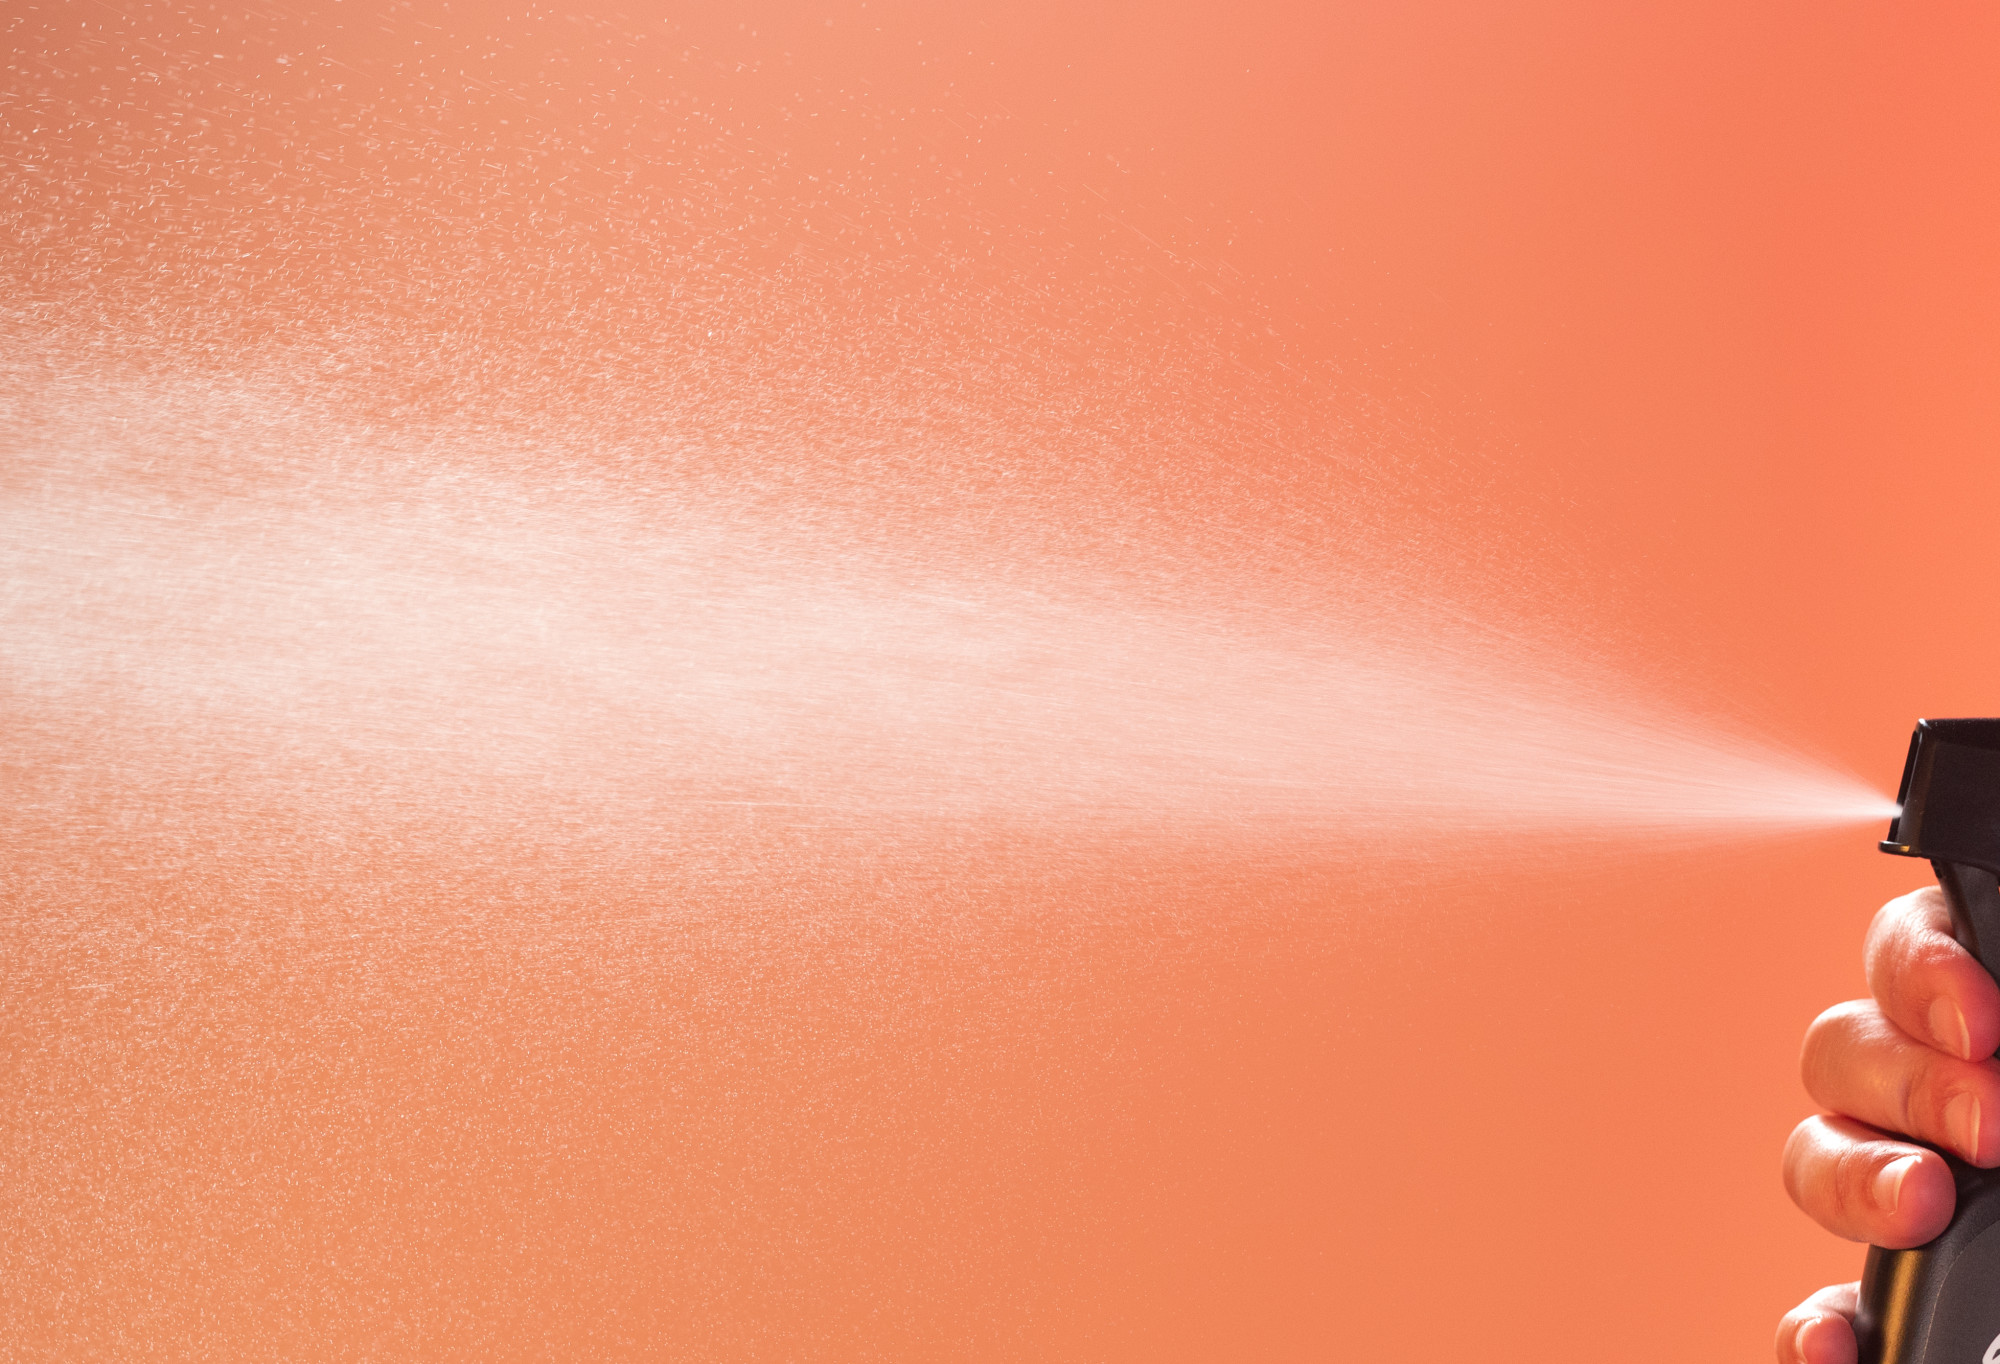 A huge spray of body spray shoots across a vibrant, deep orange background.